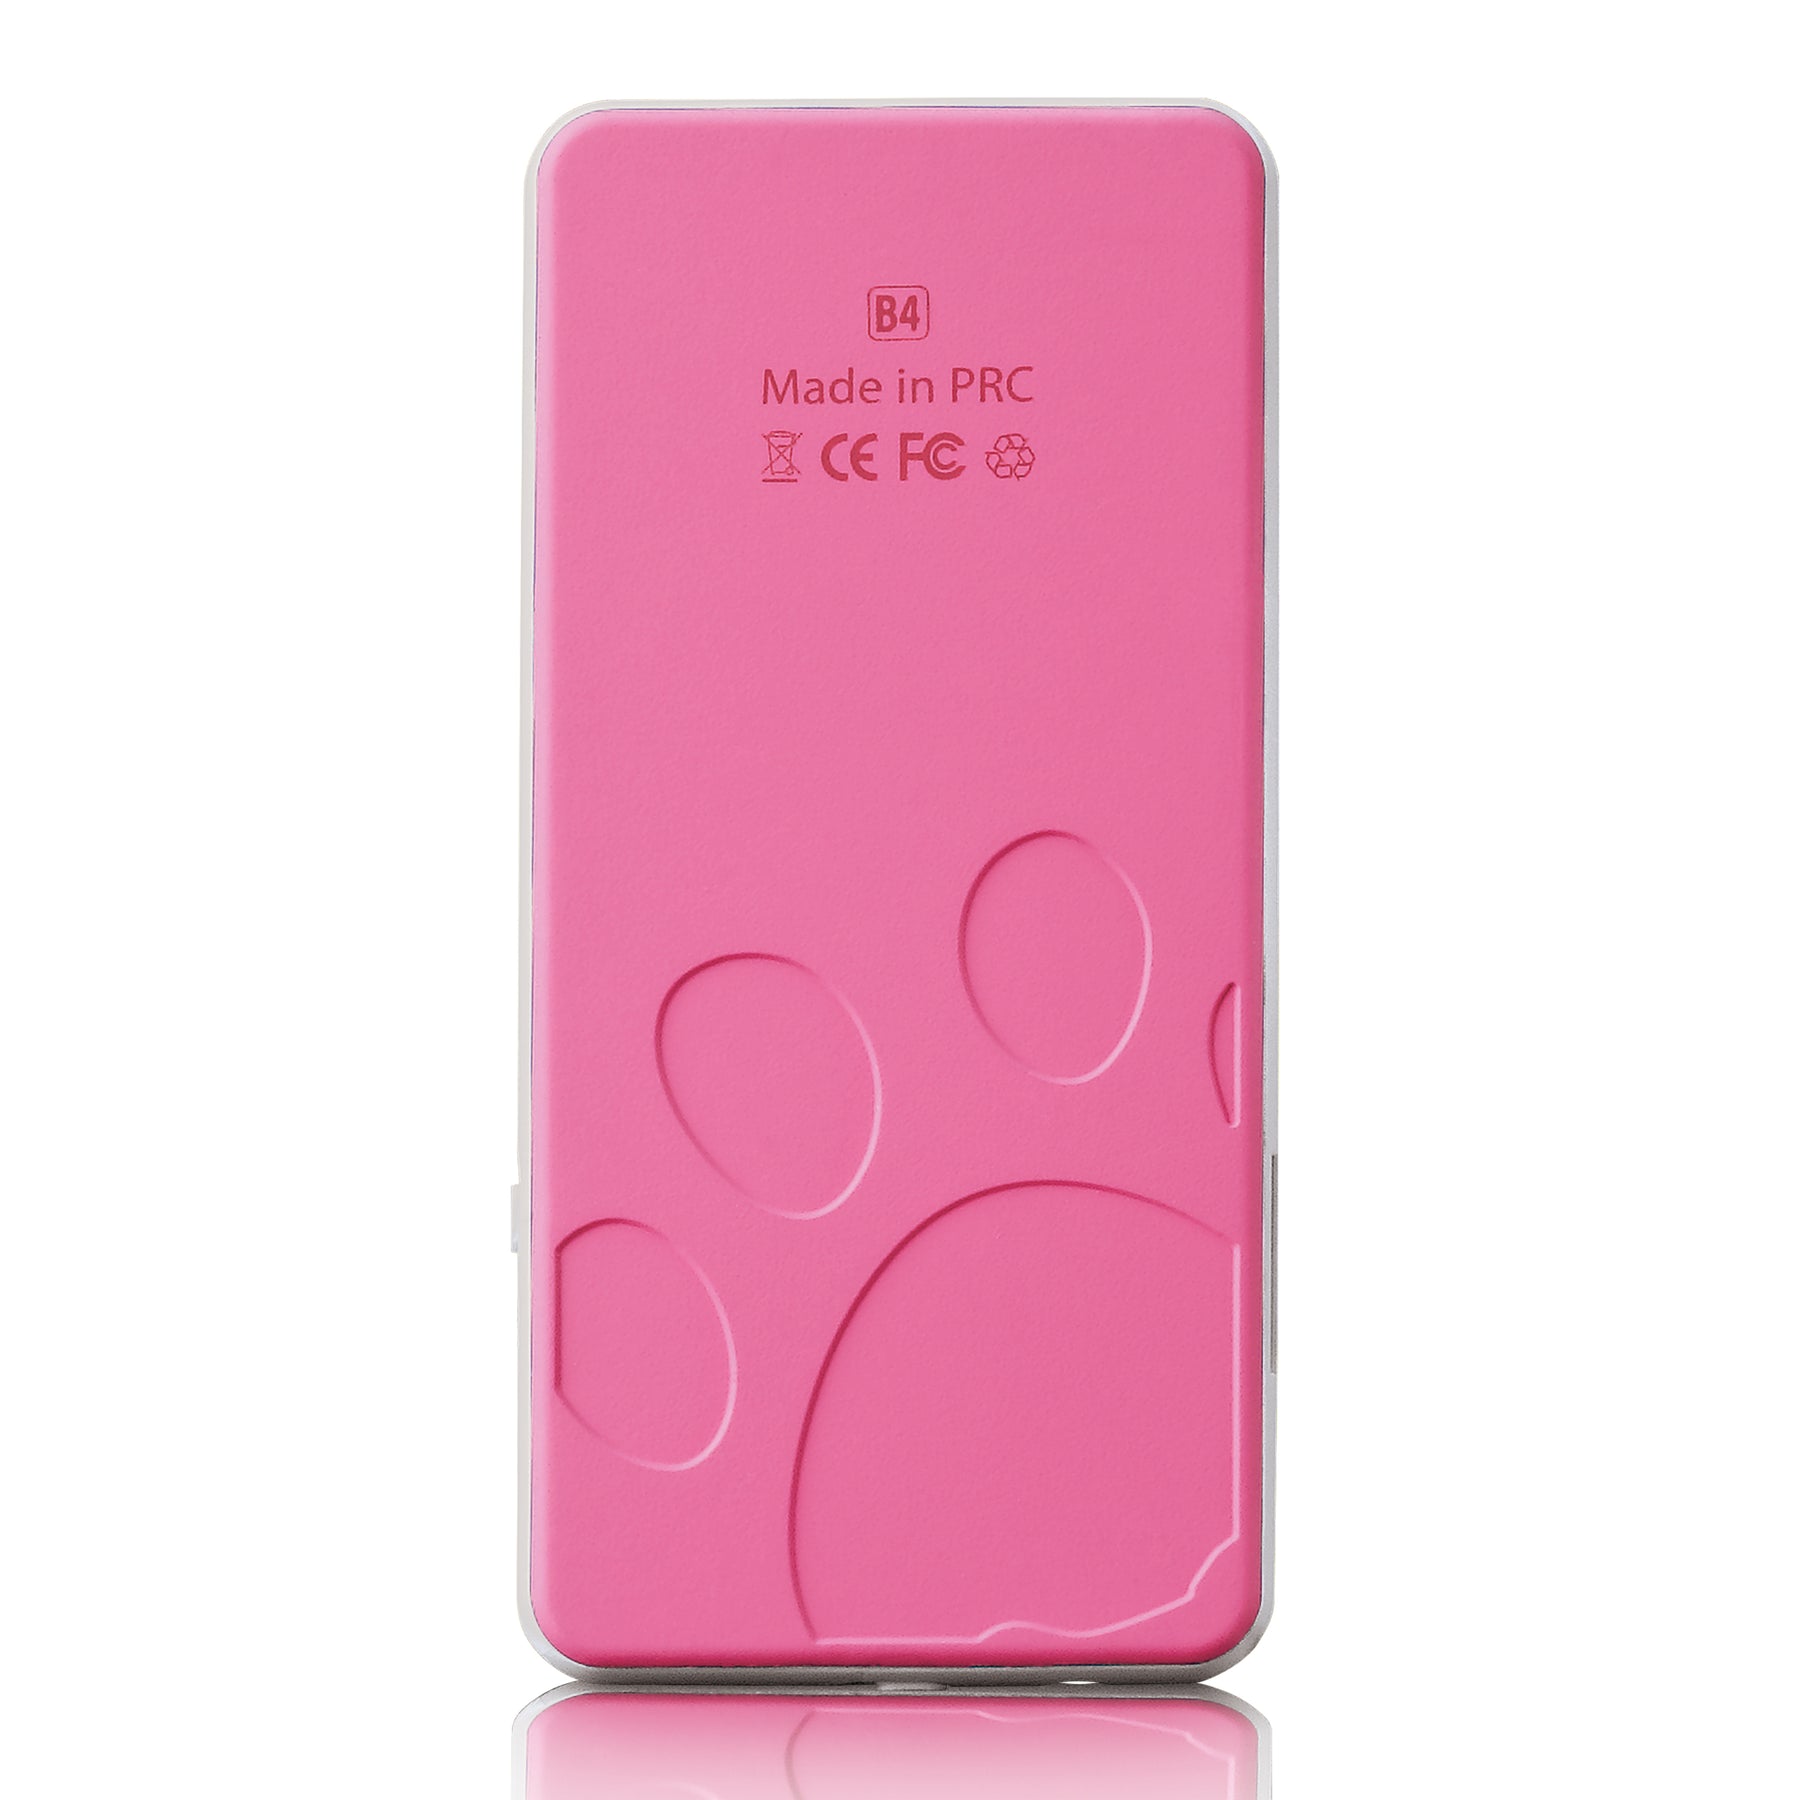 LENCO Xemio-560PK - MP3/MP4 player with 8GB memory - Pink – Lenco-Catalog | MP3-Player